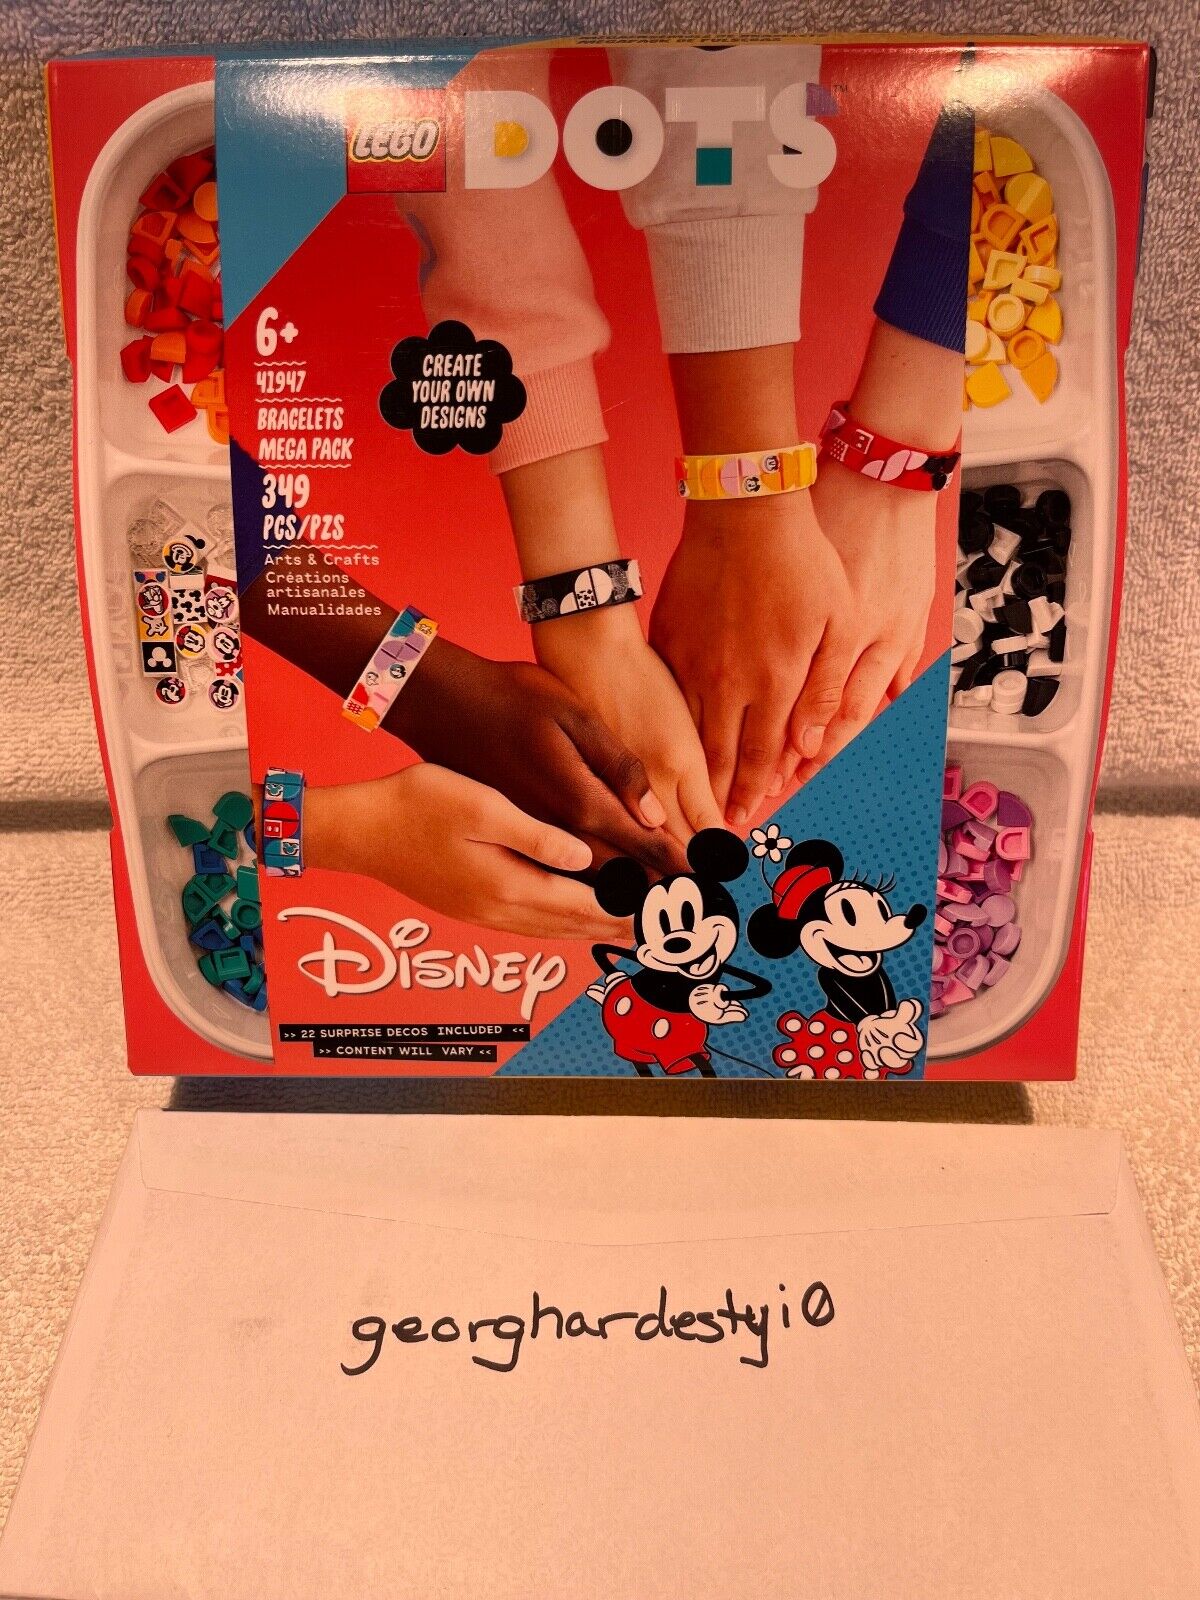 LEGO DOTS: Mickey and Friends Bracelets Mega Pack (41947)